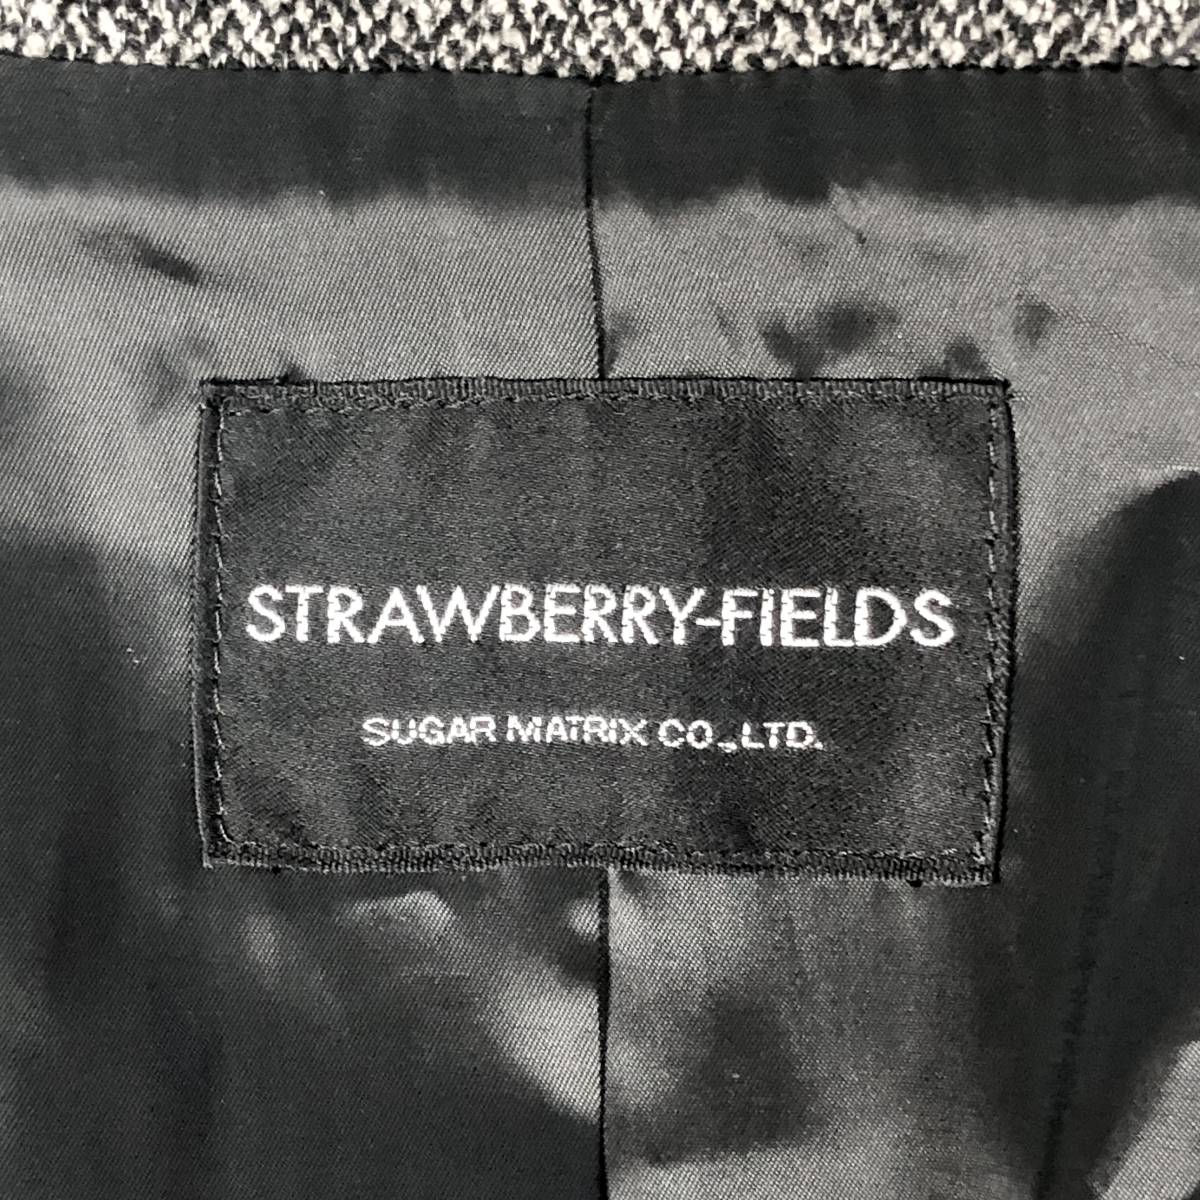 *STRAWBERRY-FIEDLS* size 2(M size corresponding ) strawberry field lady's black black setup skirt 7 minute sleeve J091